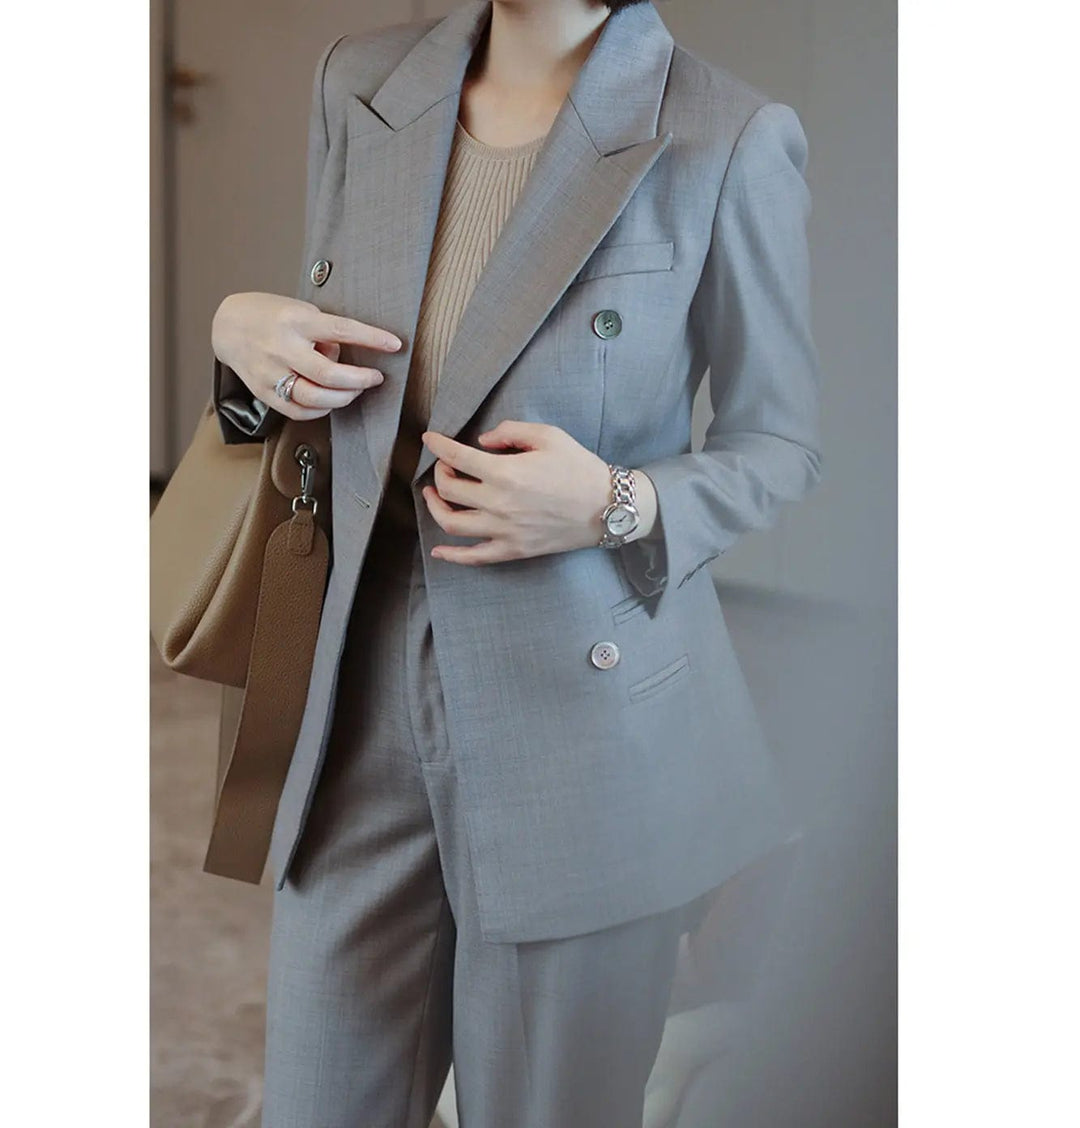 solovedress Formal Women Suit Peak Lapel Double Breasted 4 Buttons Blazer